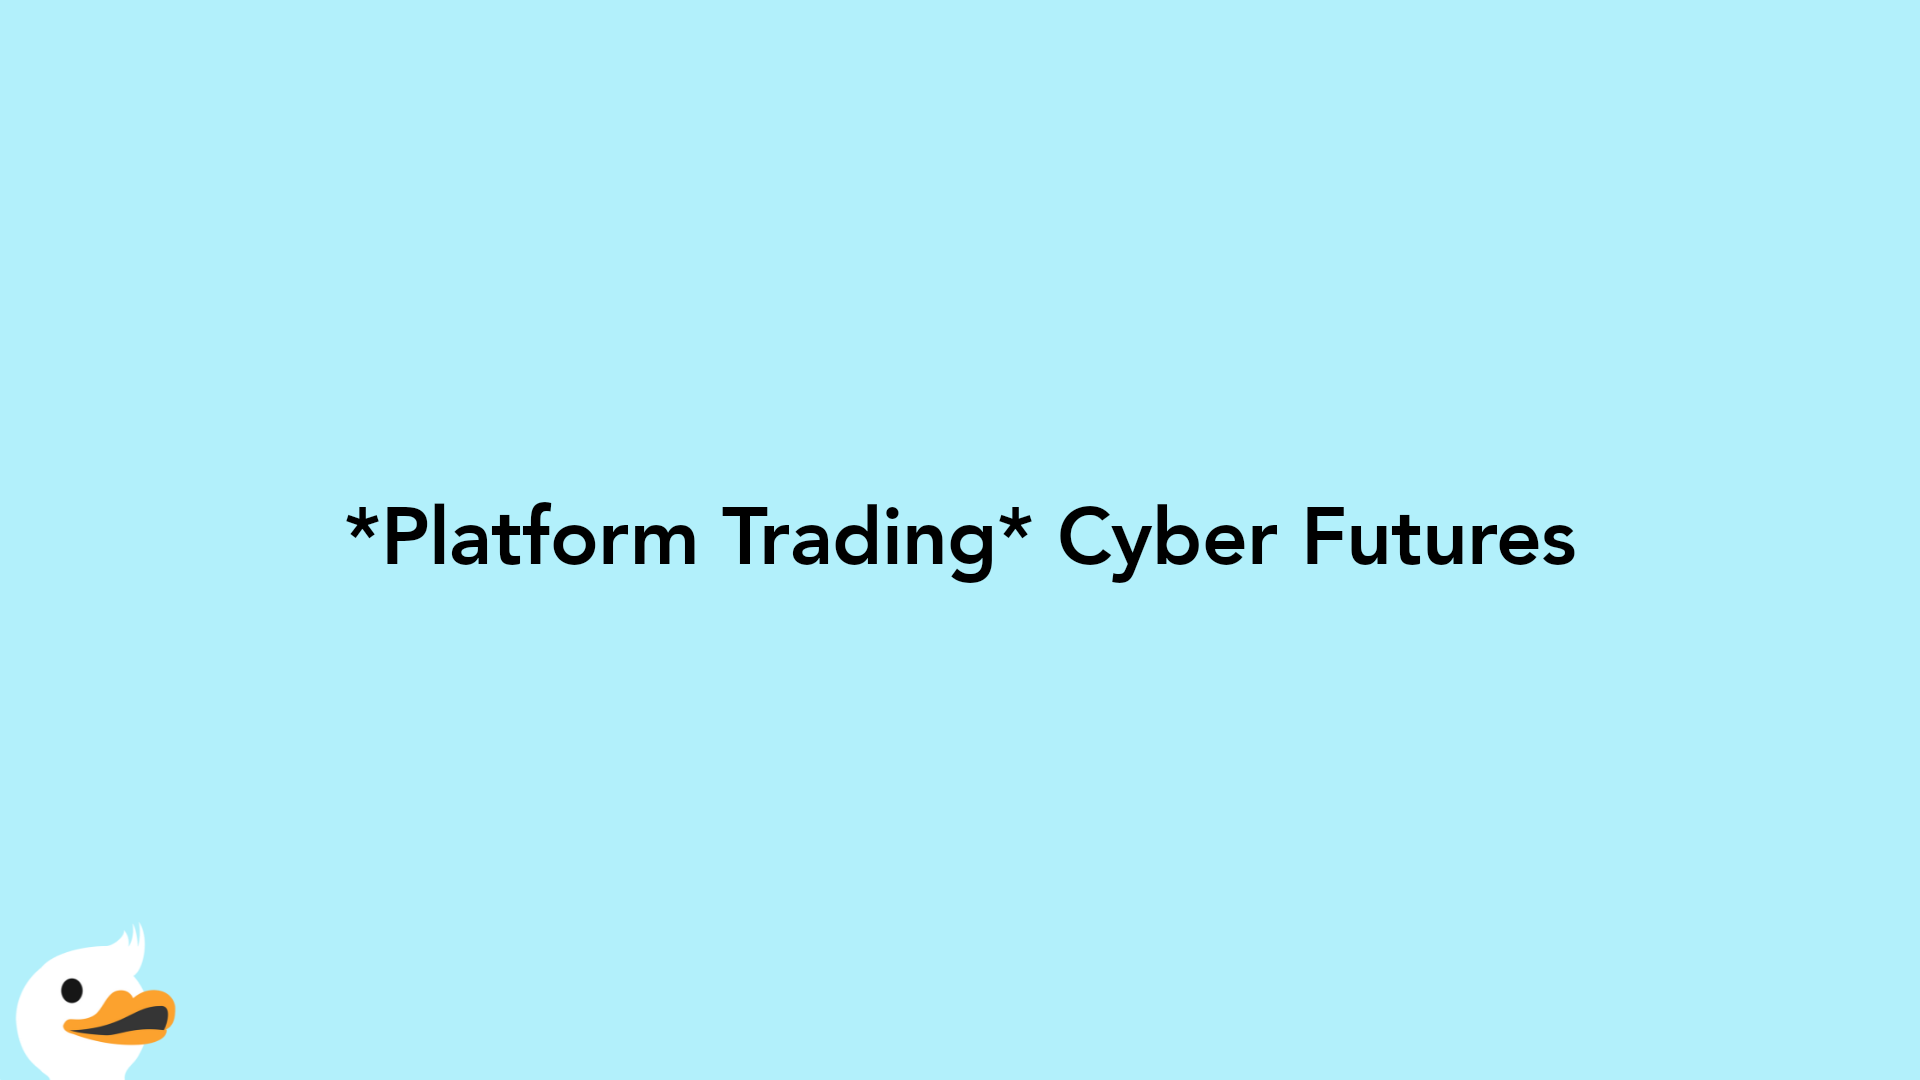 Platform Trading Cyber Futures